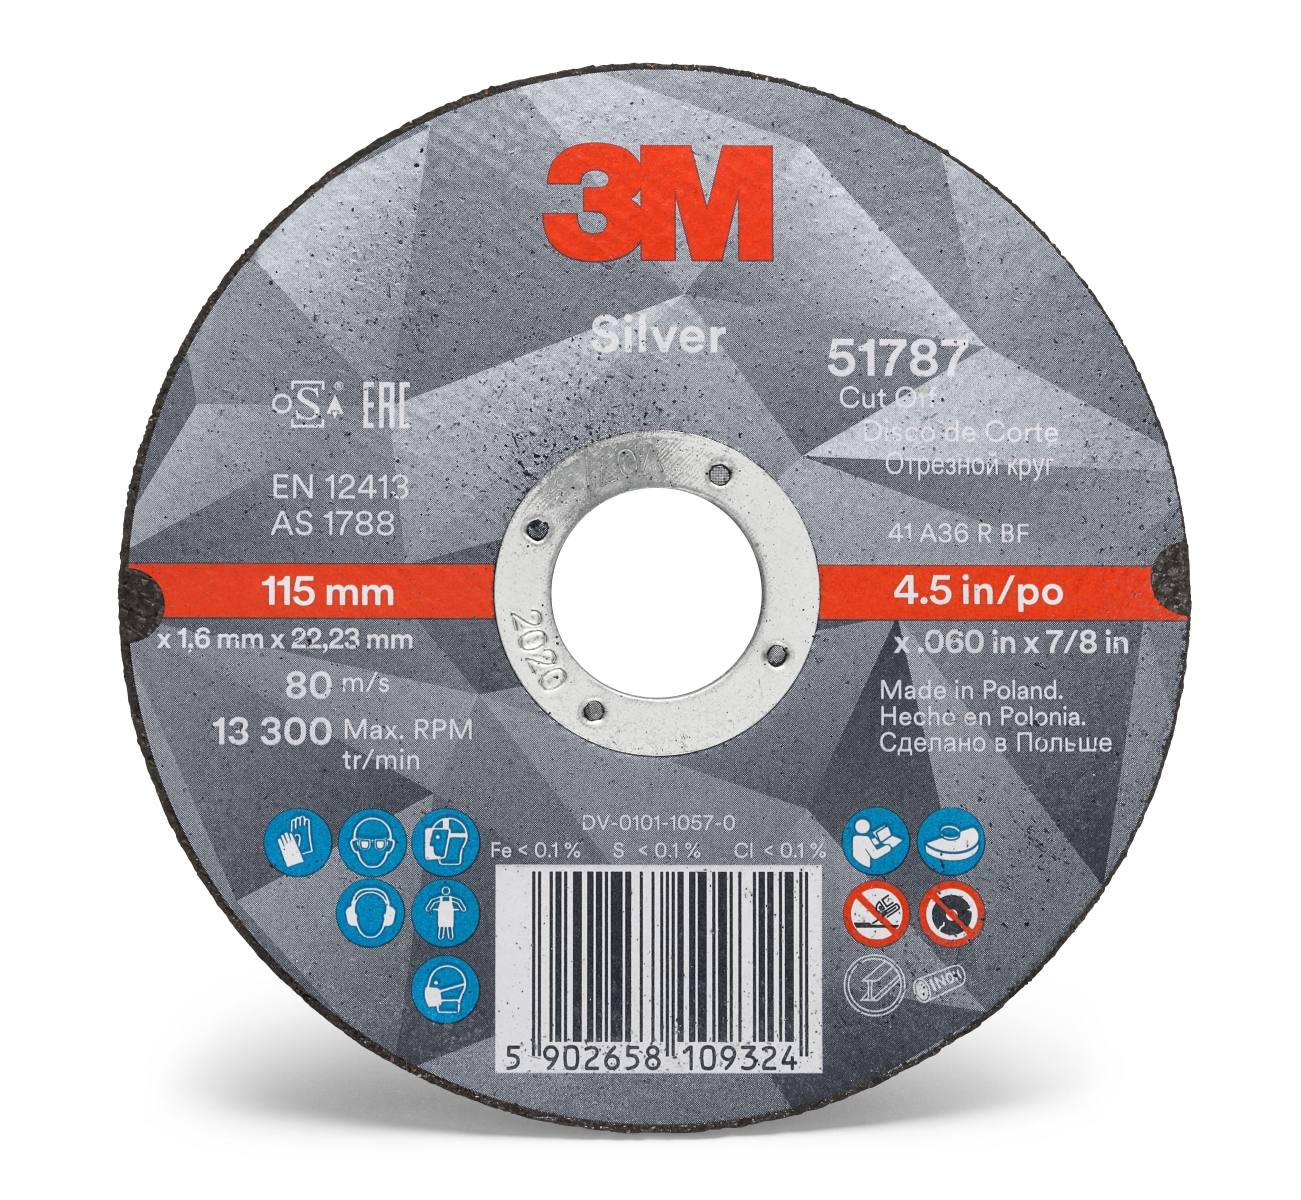 3M Silver Cut-Off Wheel cutting disc, 230 mm, 2.5 mm, 22.23 mm, T42, 51805